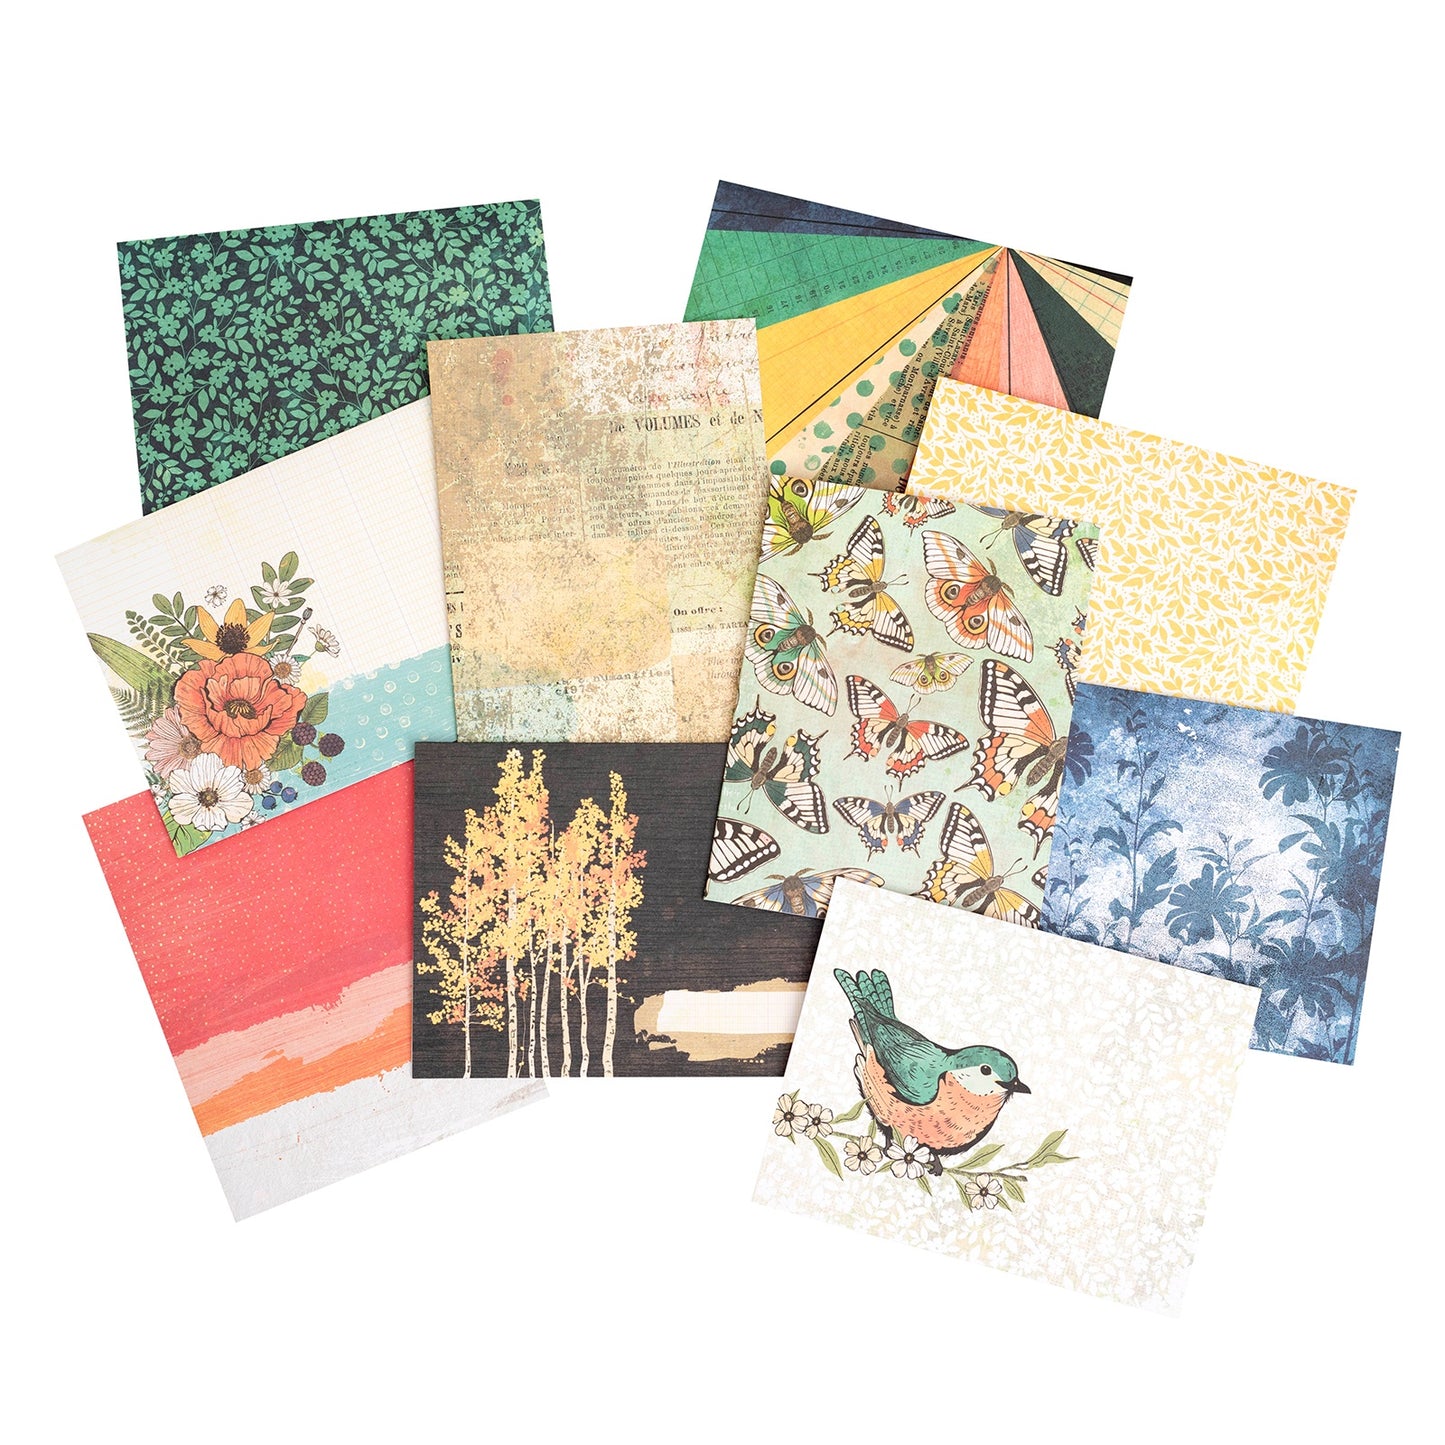 American Crafts A2 Cards W/Envelopes (4.375"X5.75") 40/Box-Vicki Boutin Fernwood